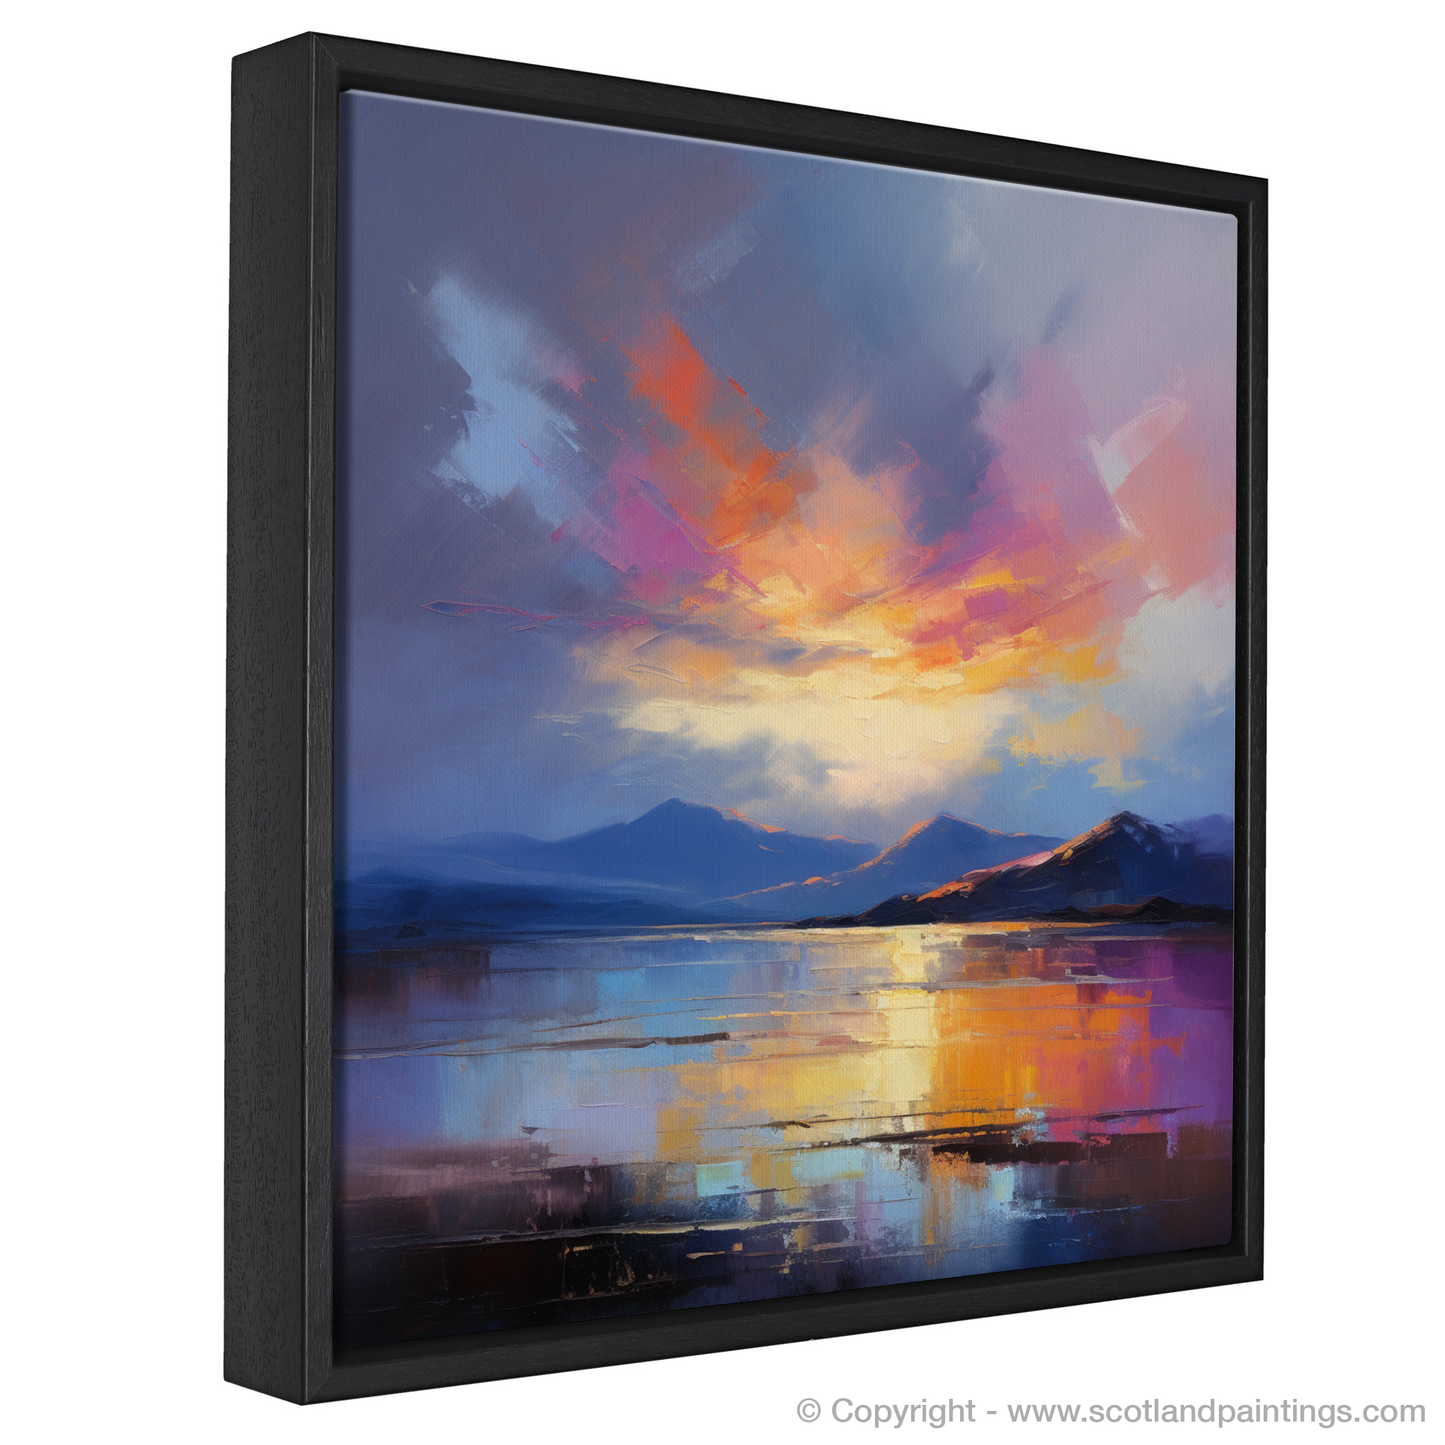 Painting and Art Print of A huge sky above Loch Lomond entitled "Sky Ablaze: The Majesty of Loch Lomond".